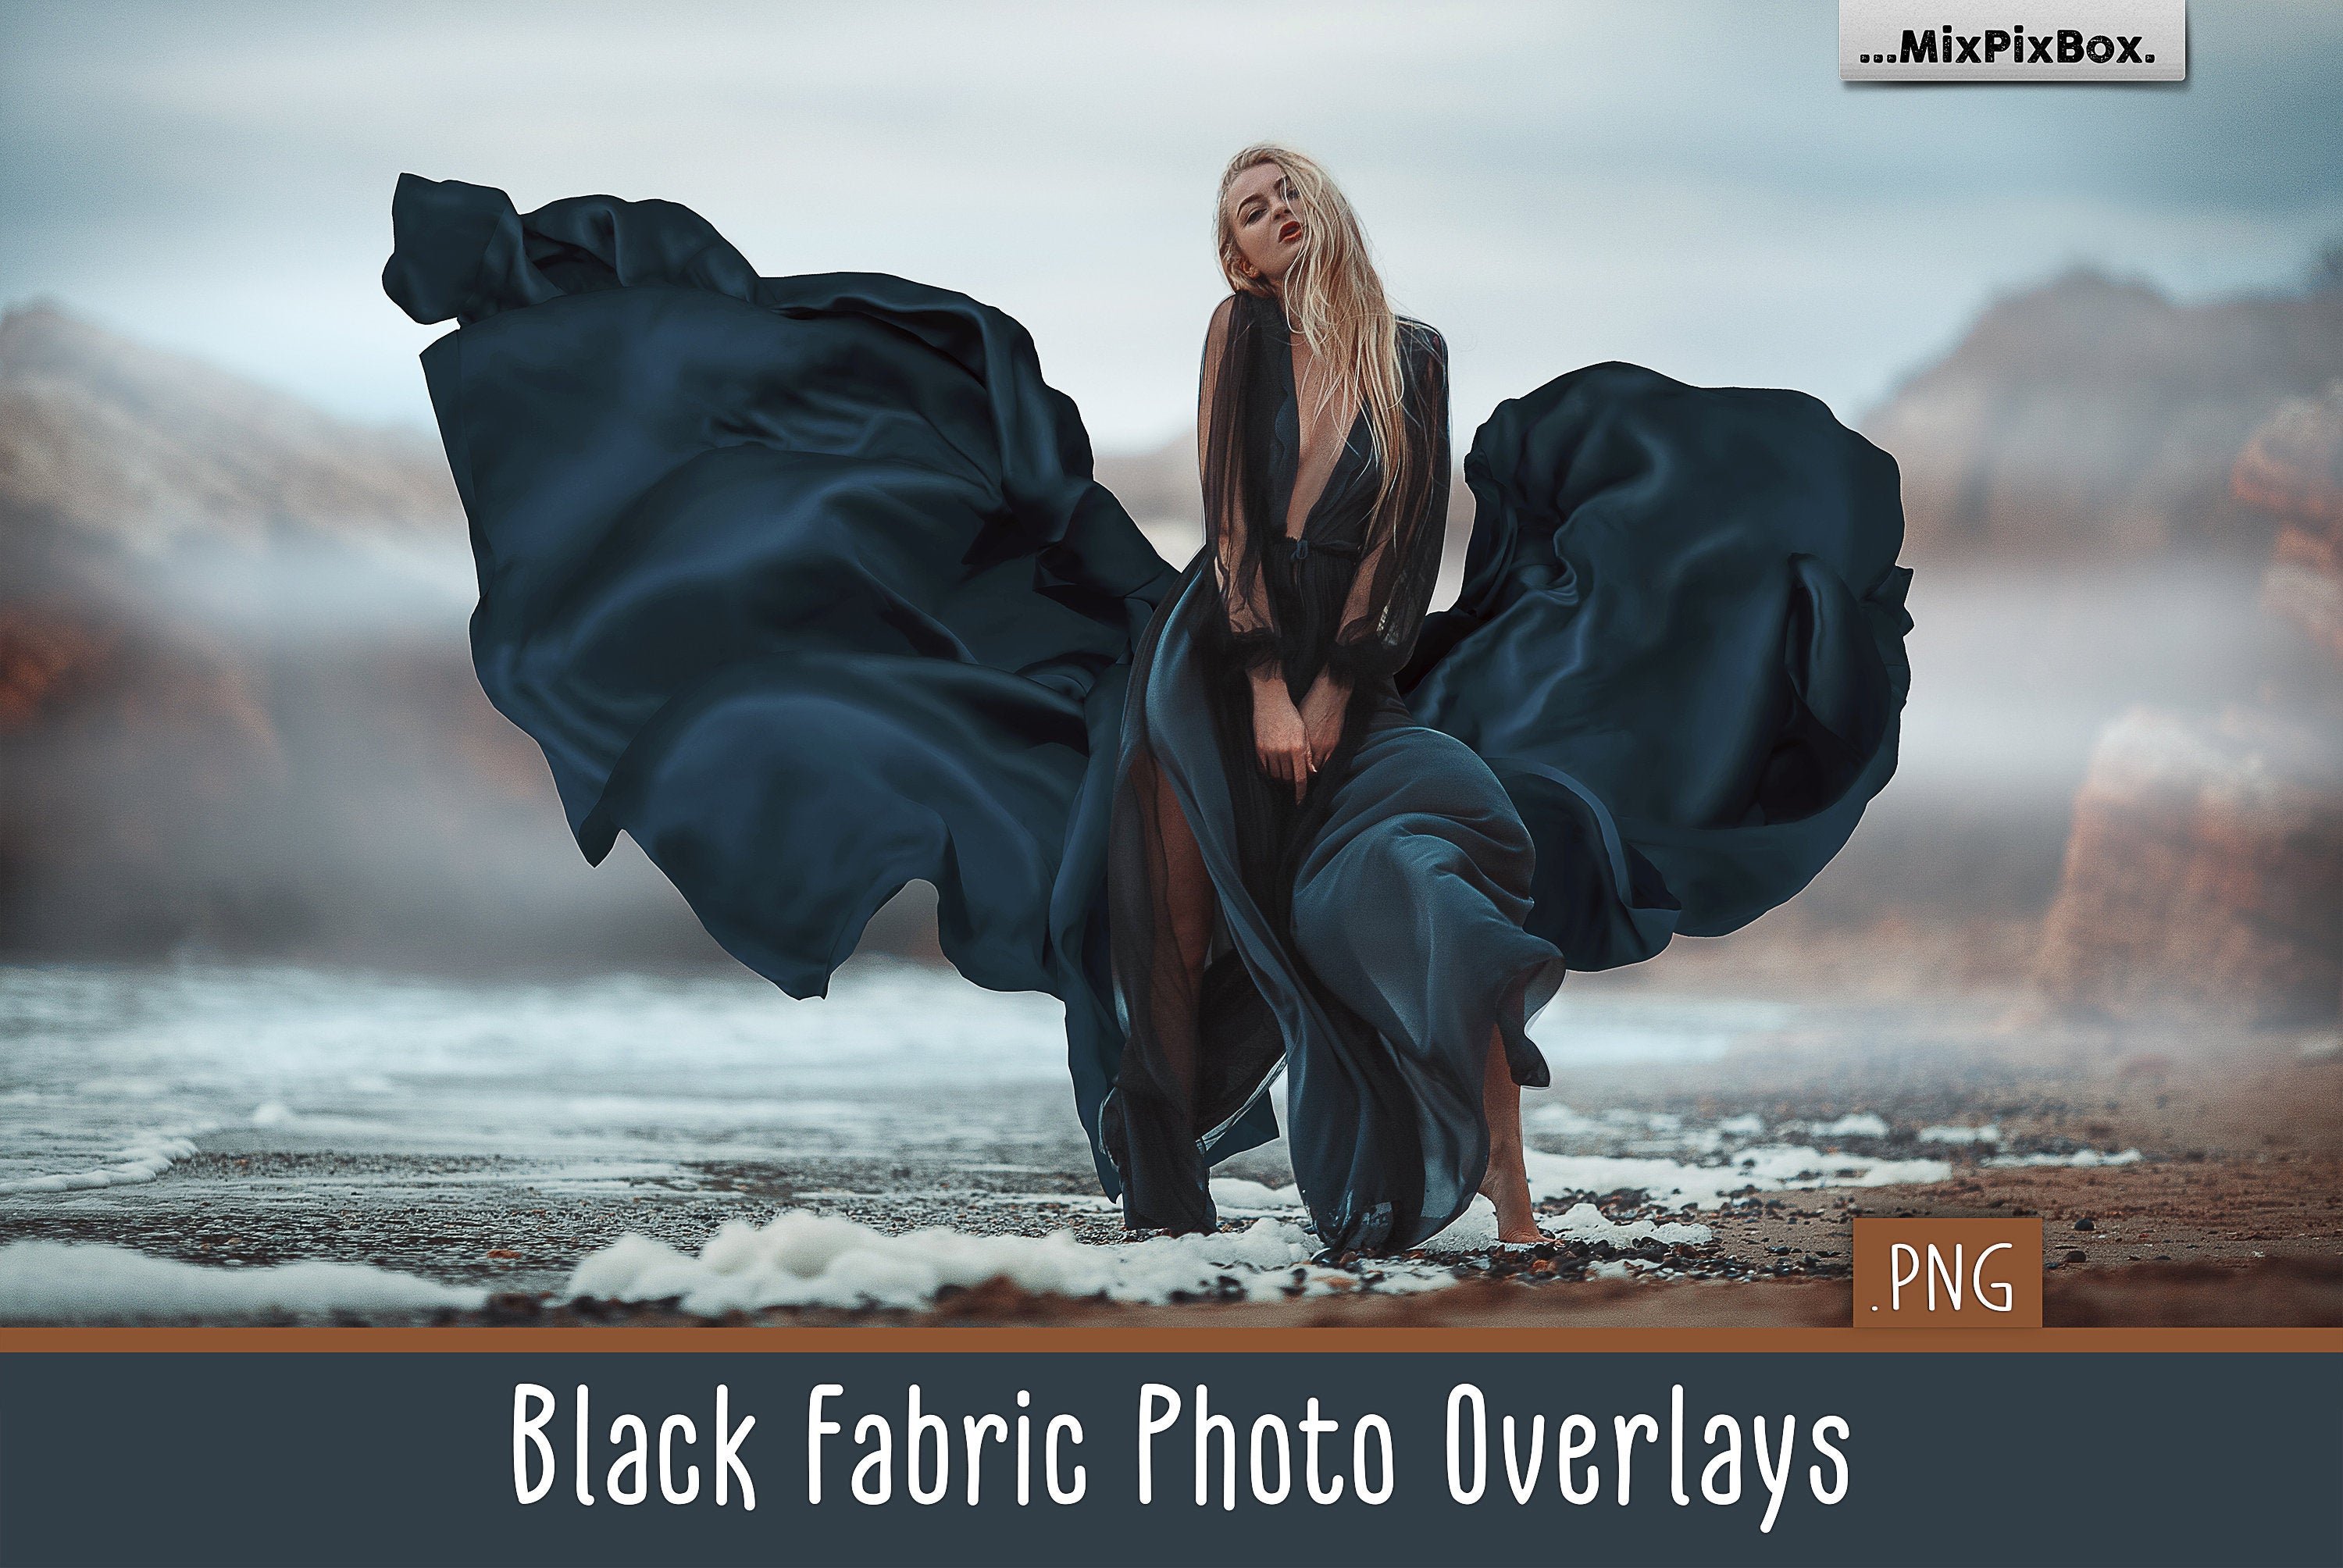 Black Fabric Photo Overlayscover image.